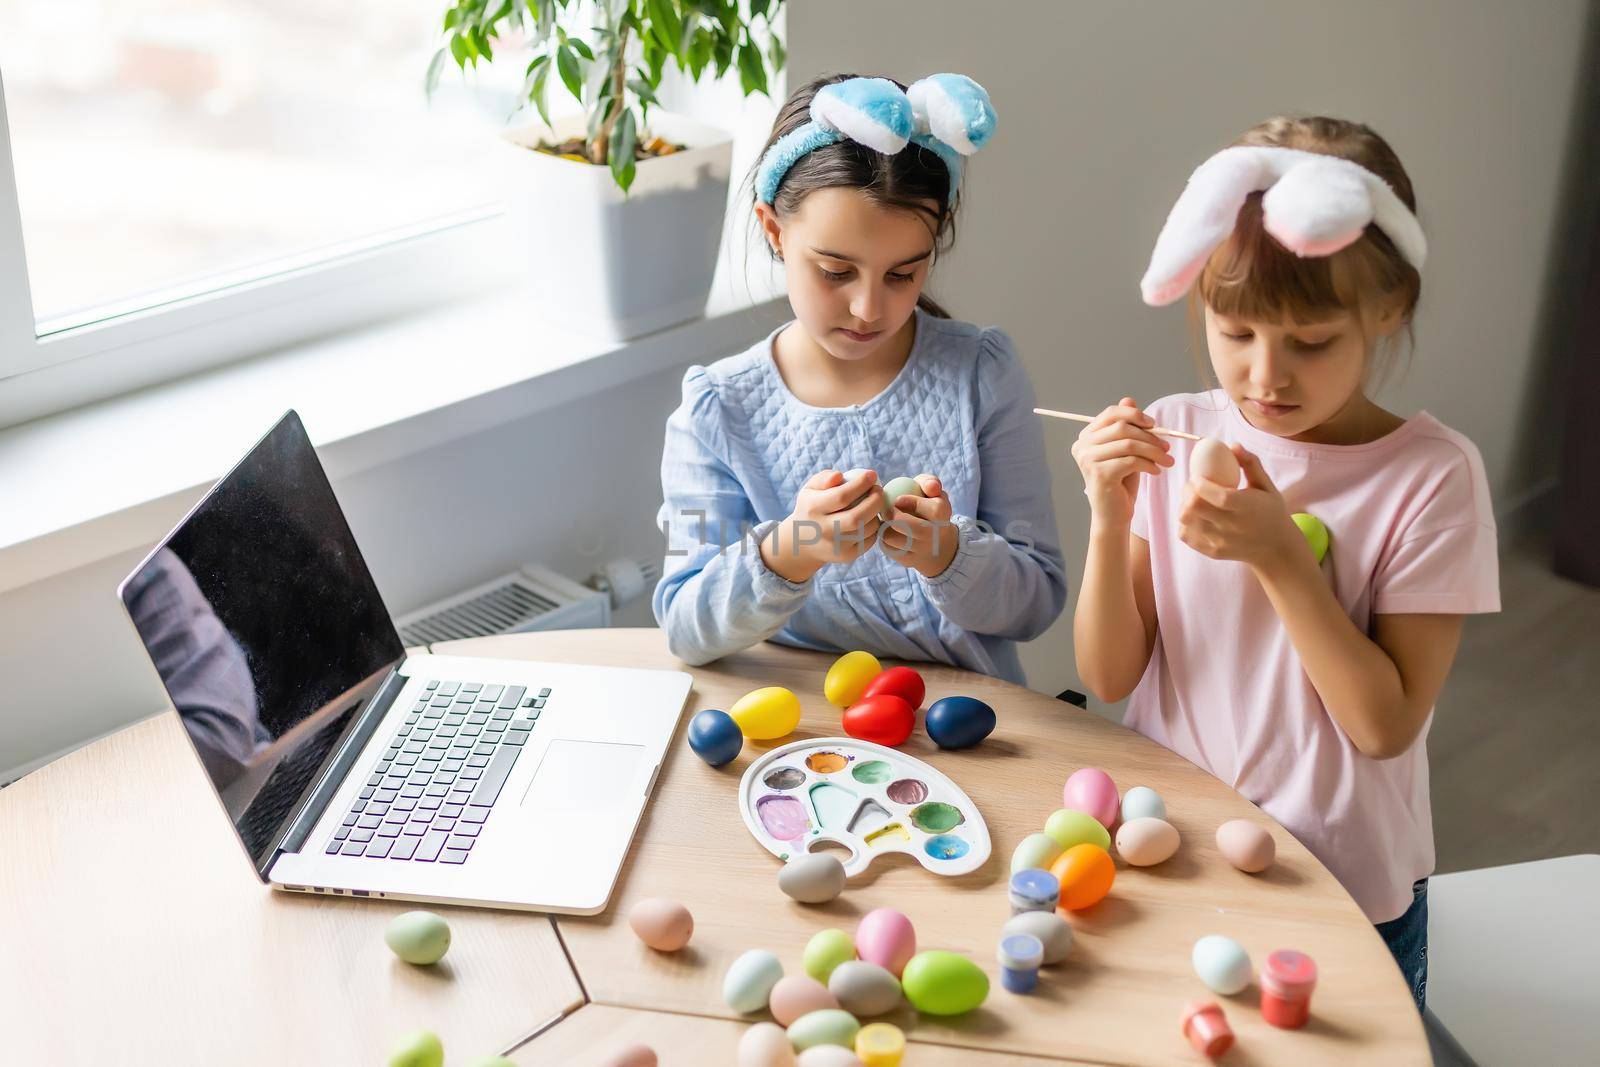 two little girls with ears hold eggs - Easter symbols. Easter egg